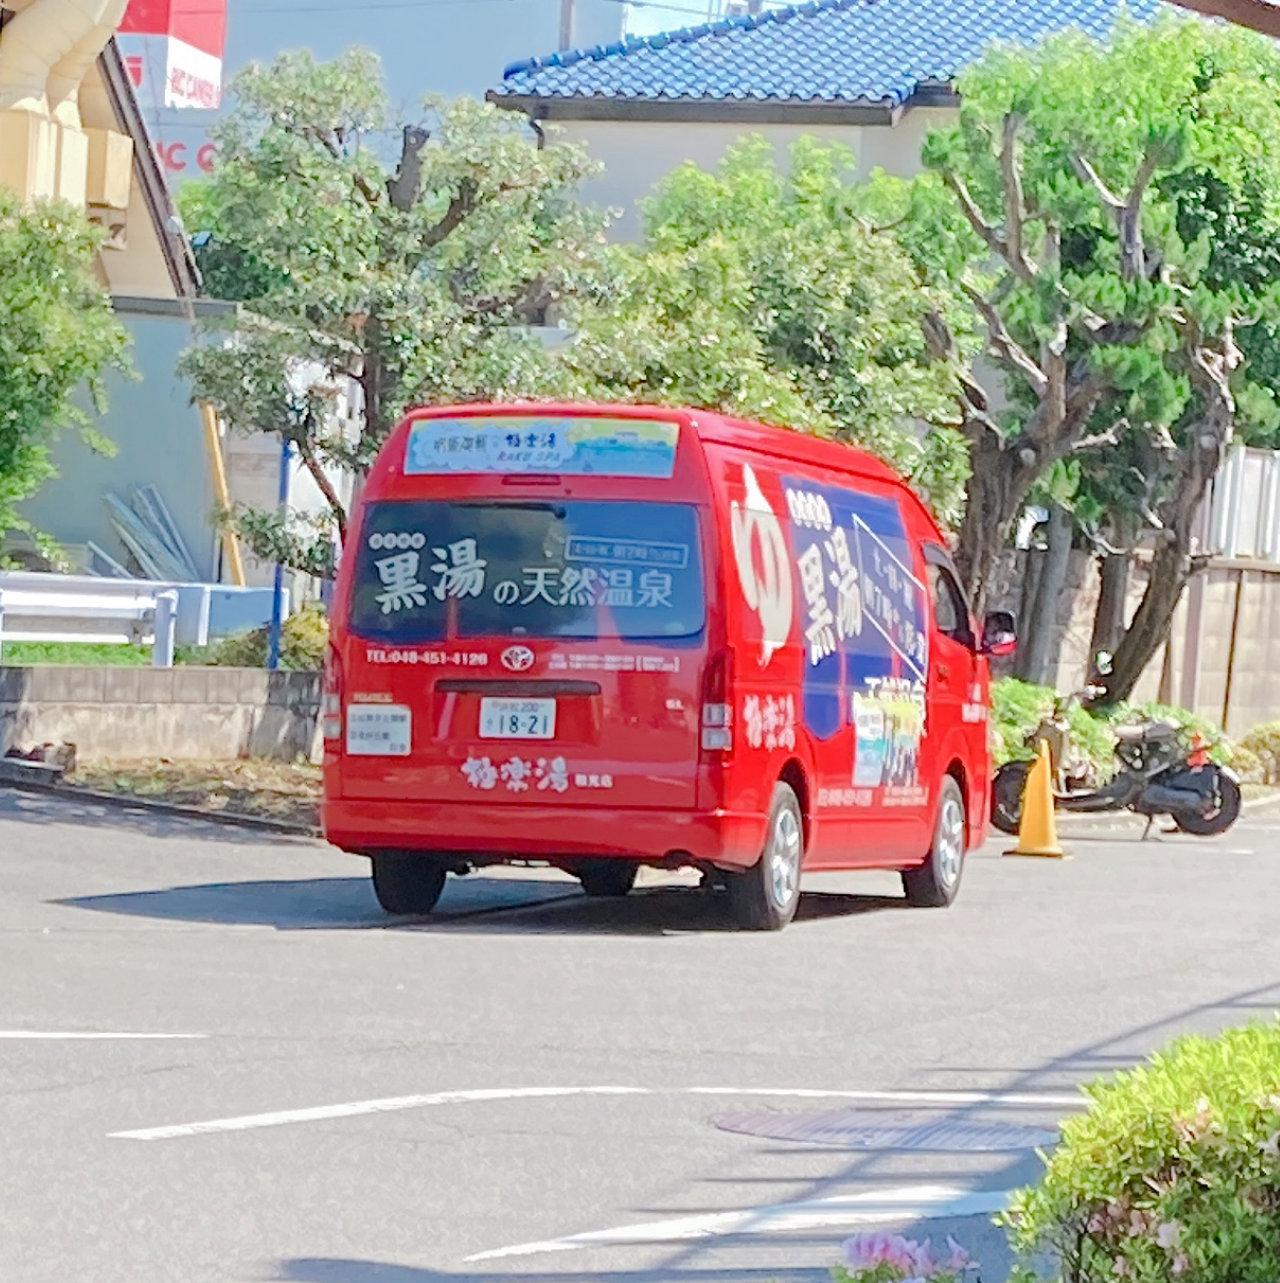 「呪術廻戦」×「極楽湯」送迎バス